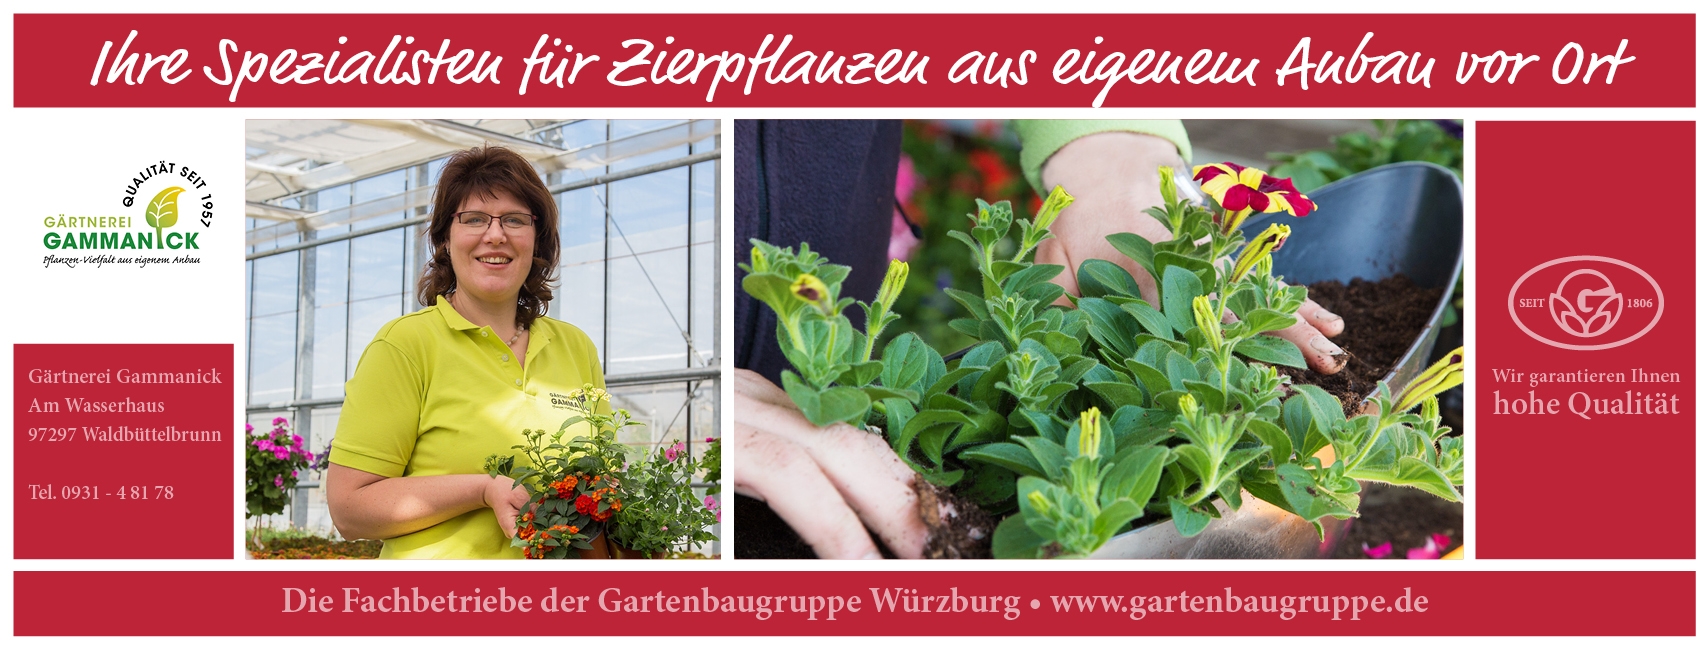 Gärtnerei Gammanick - Gartenbaugruppe Würzburg